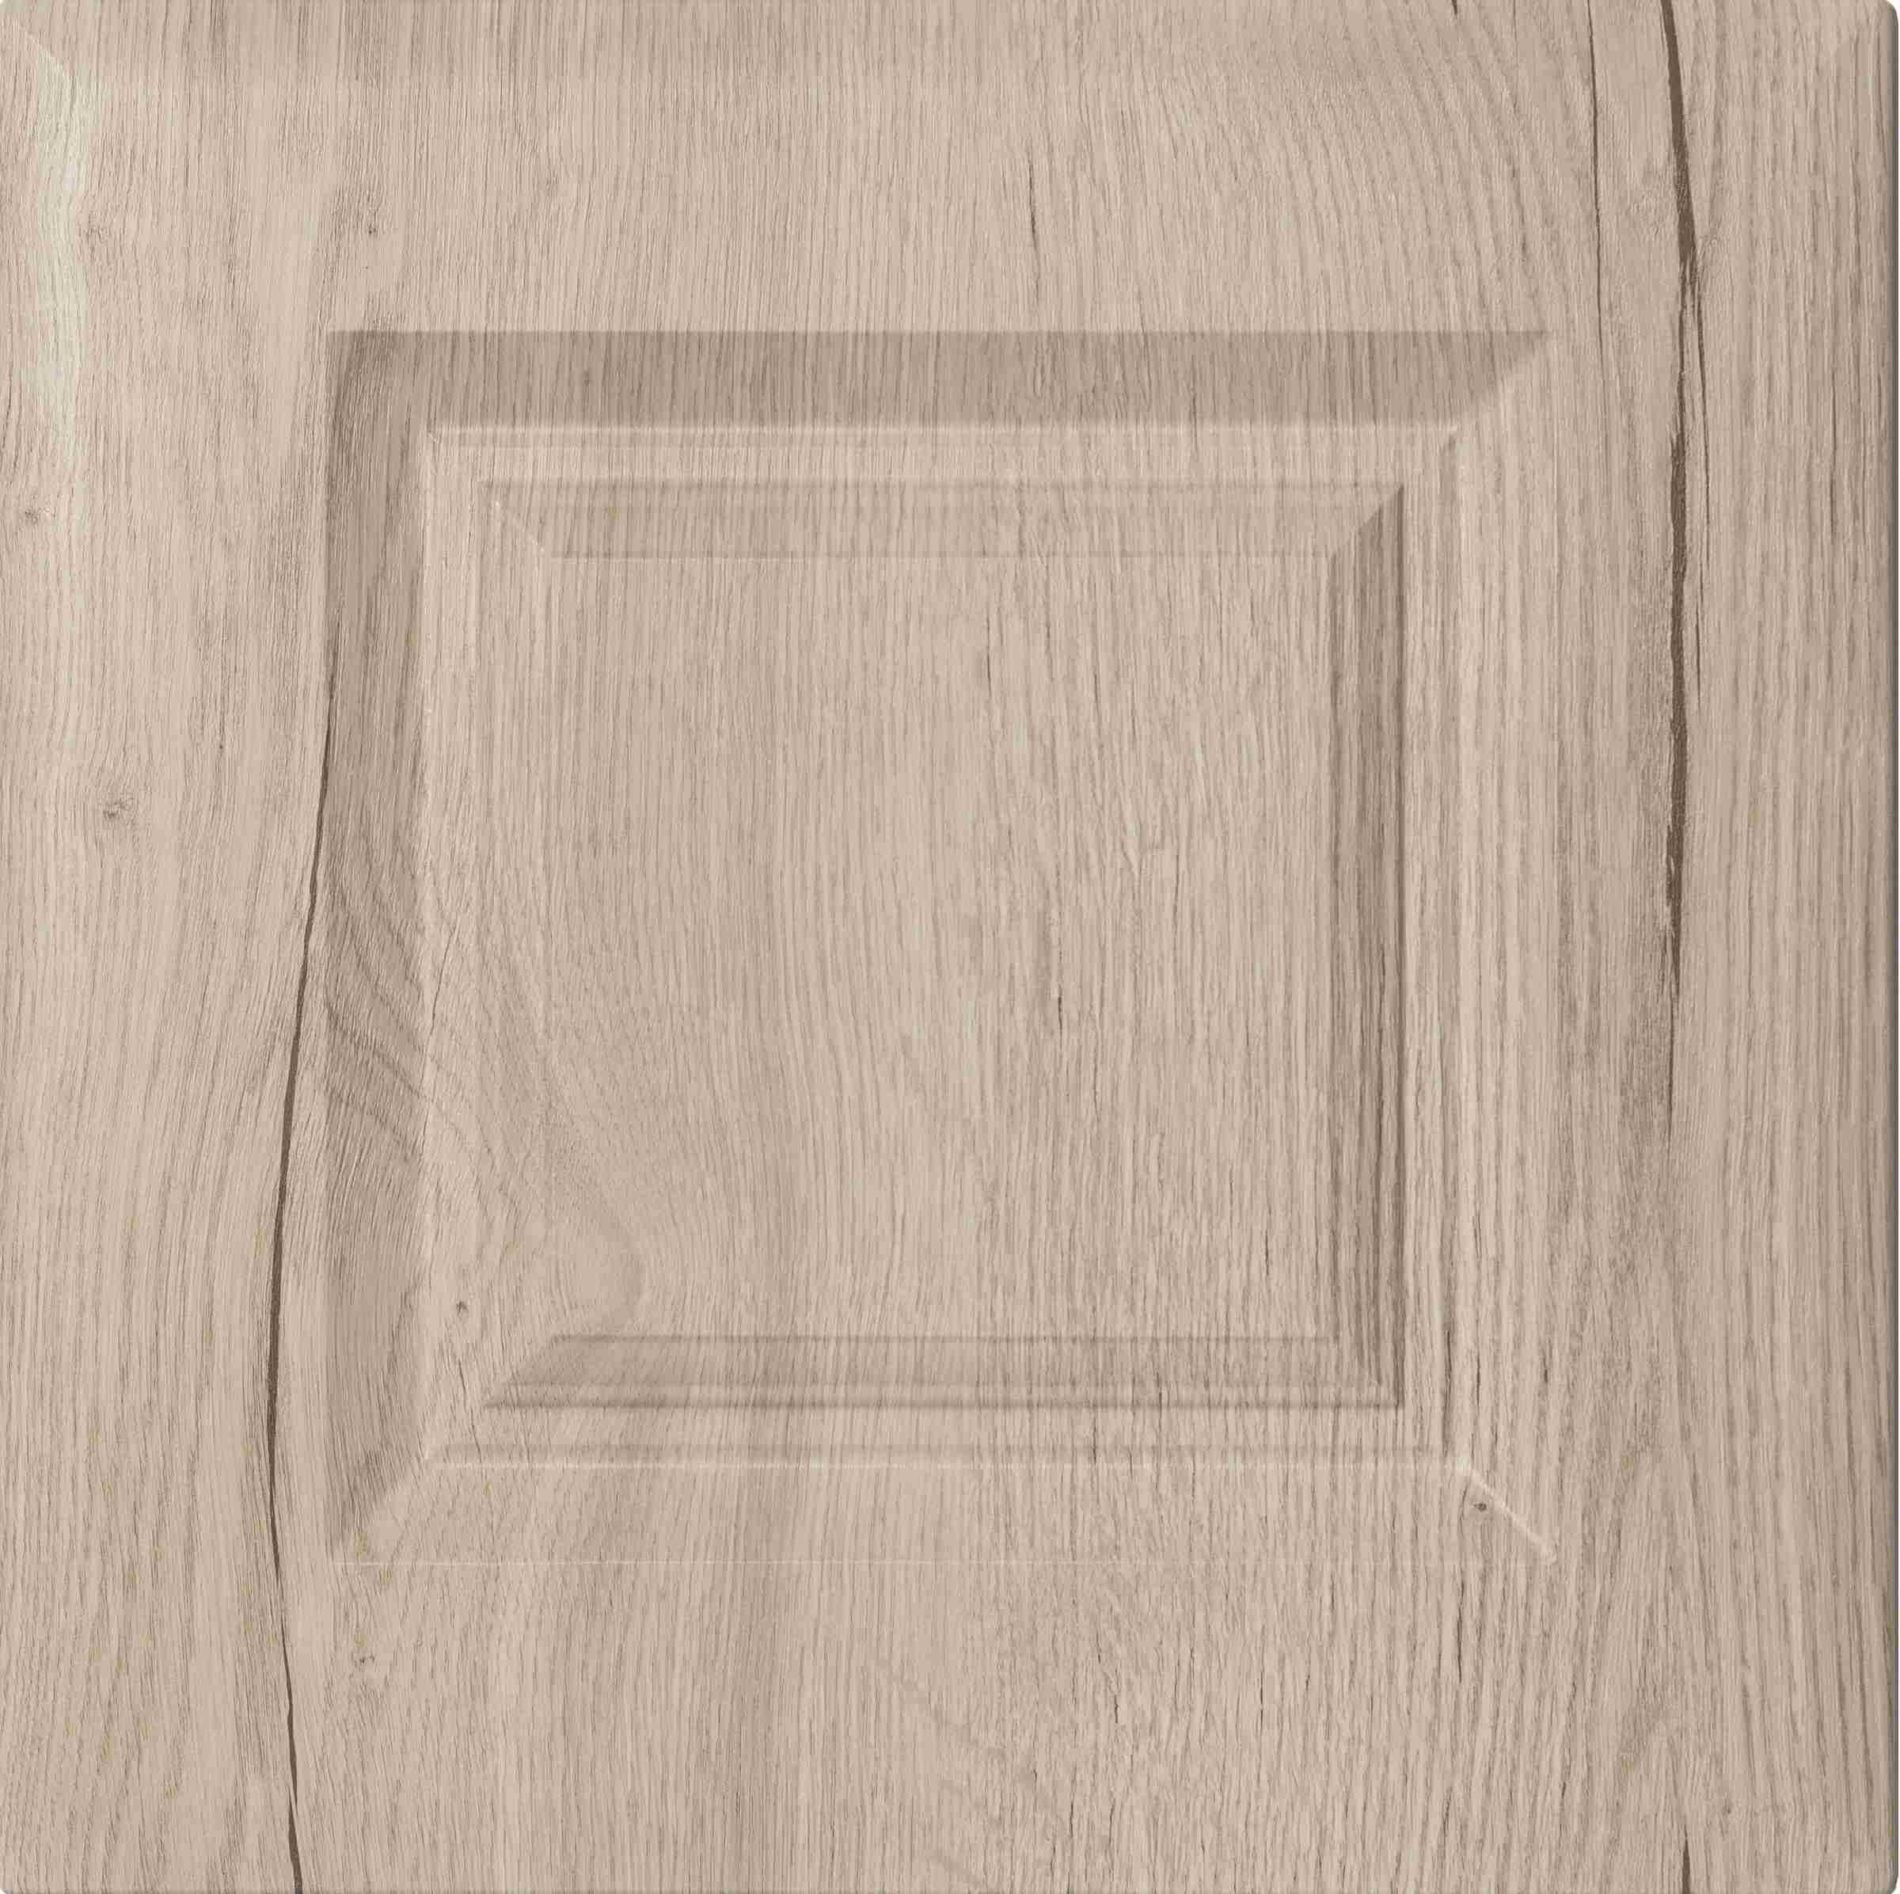 white oak wooden panel